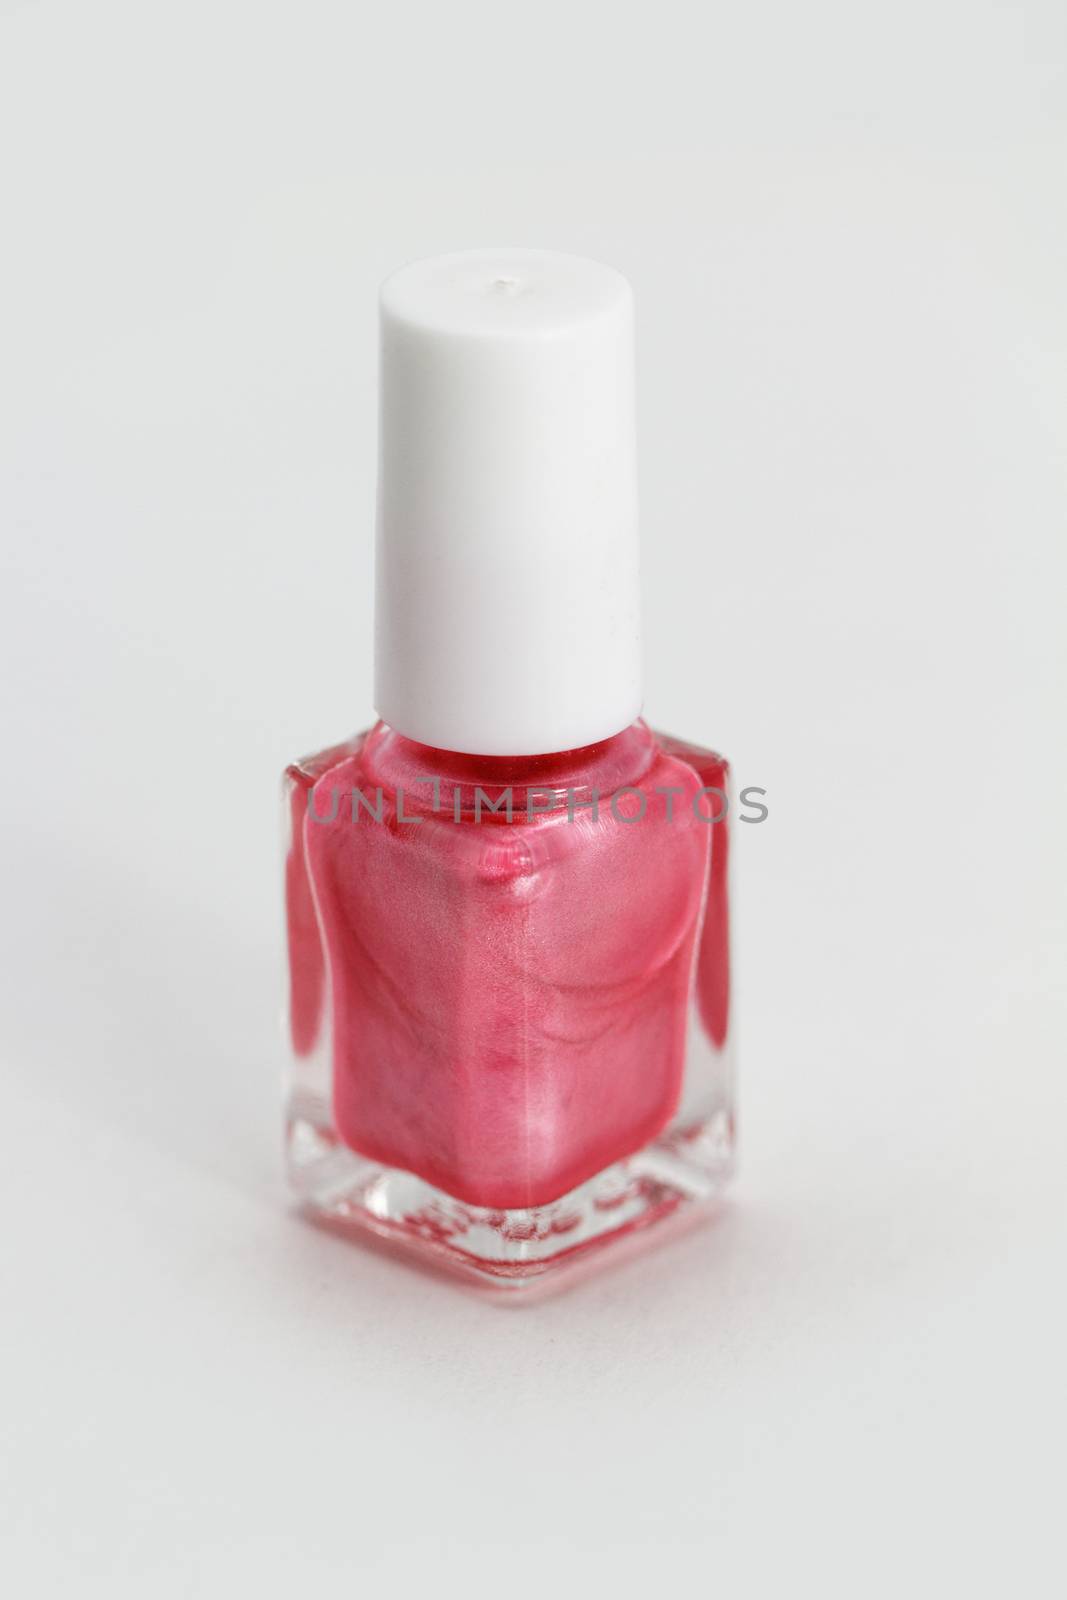 Colorful nail polish - white background, pink style